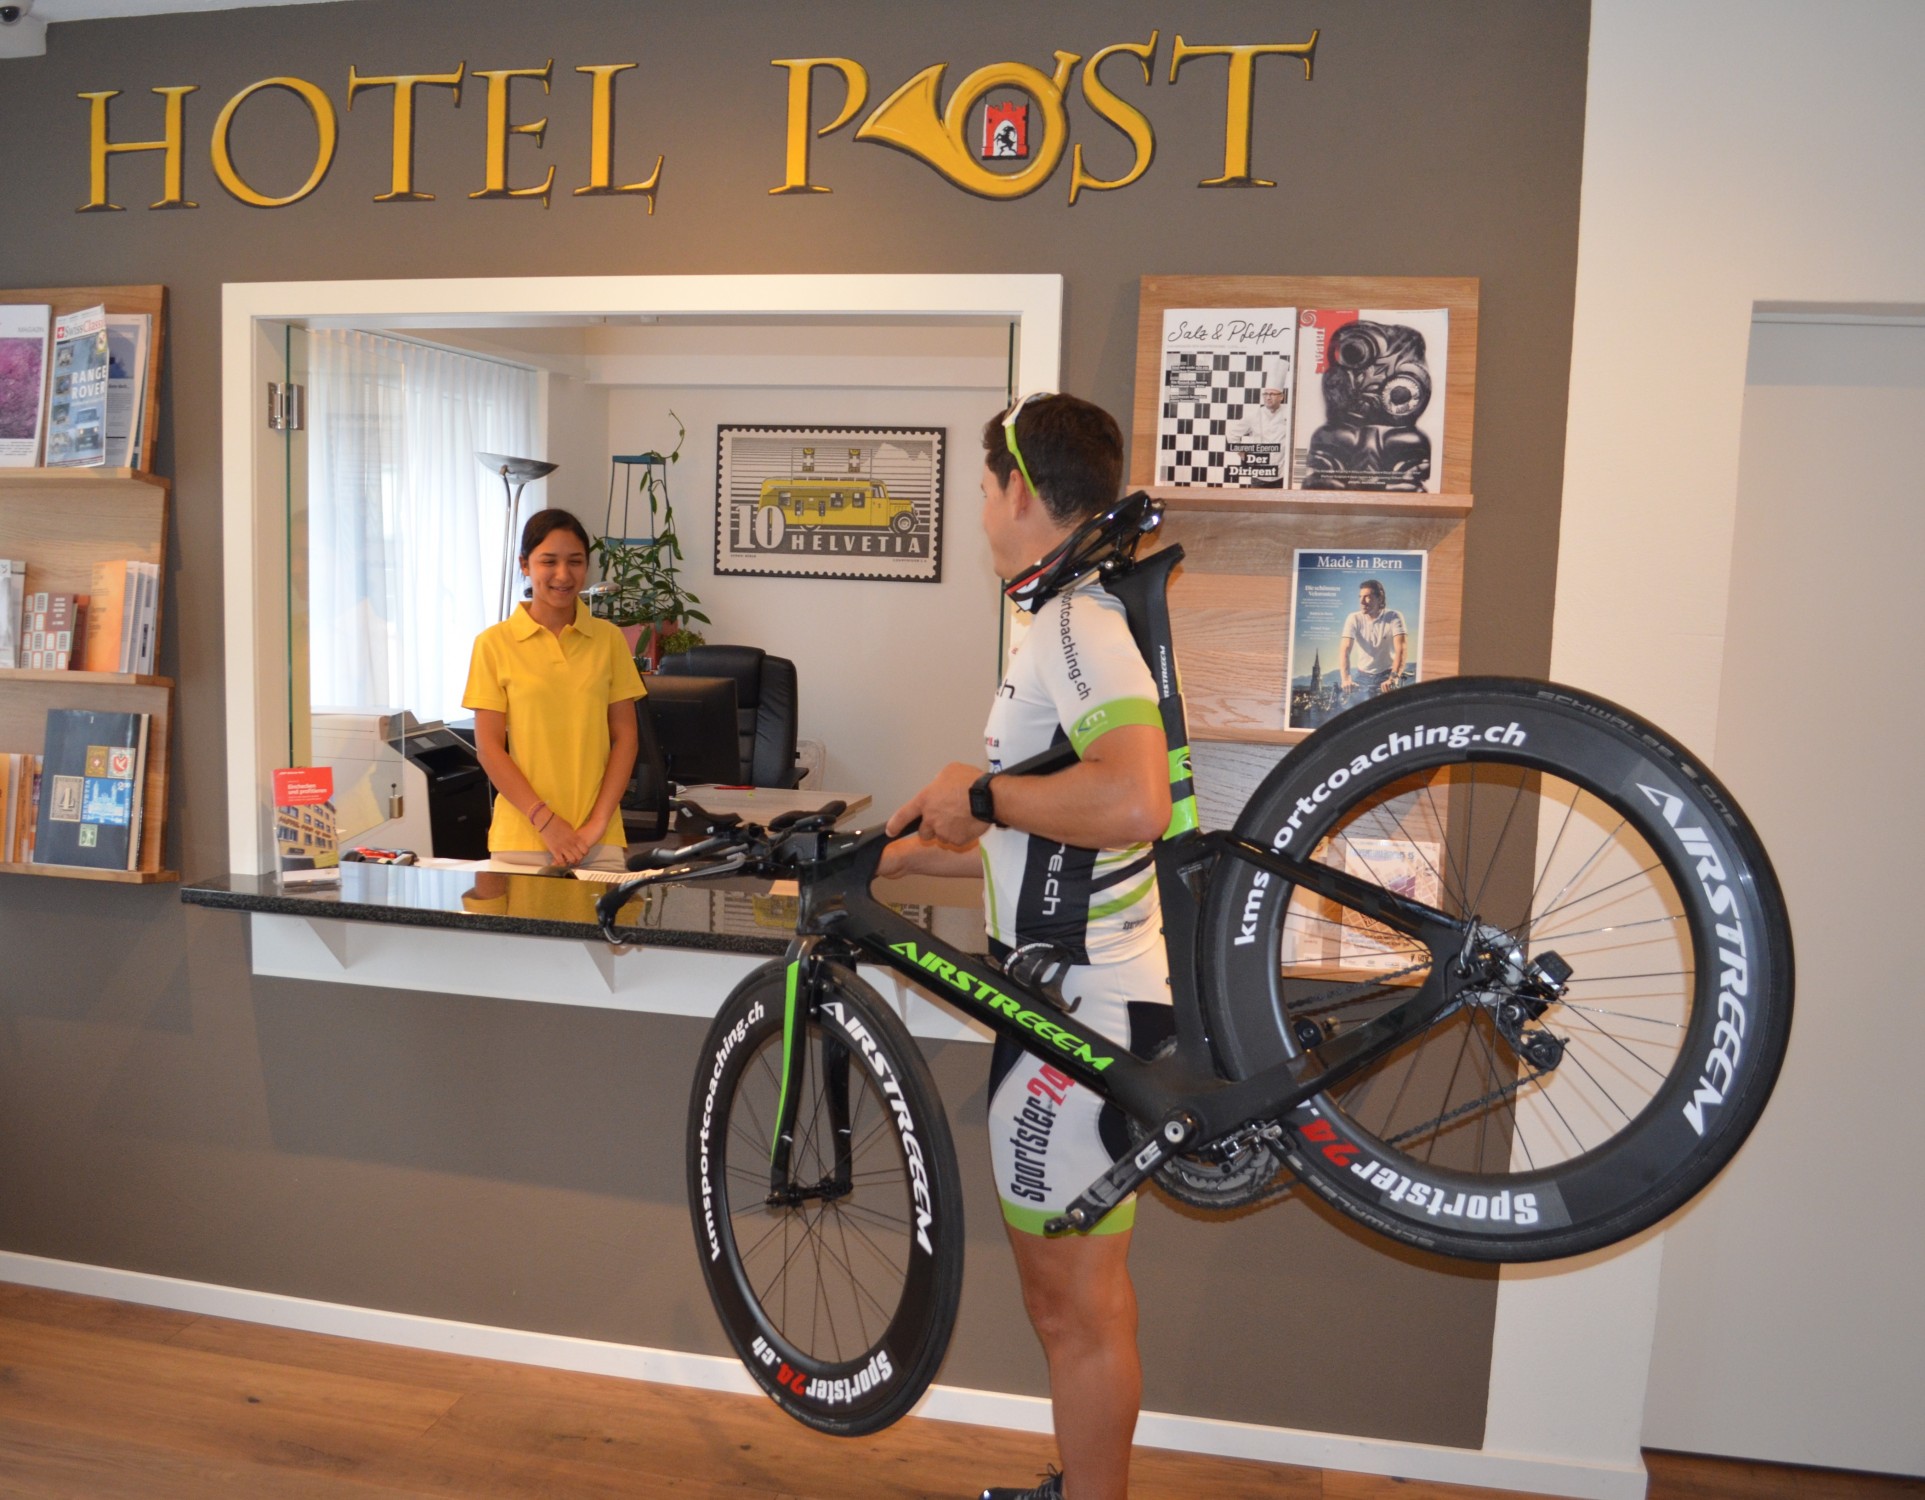 Central Hotel Post in Chur, Schweiz - Hotel Post Chur